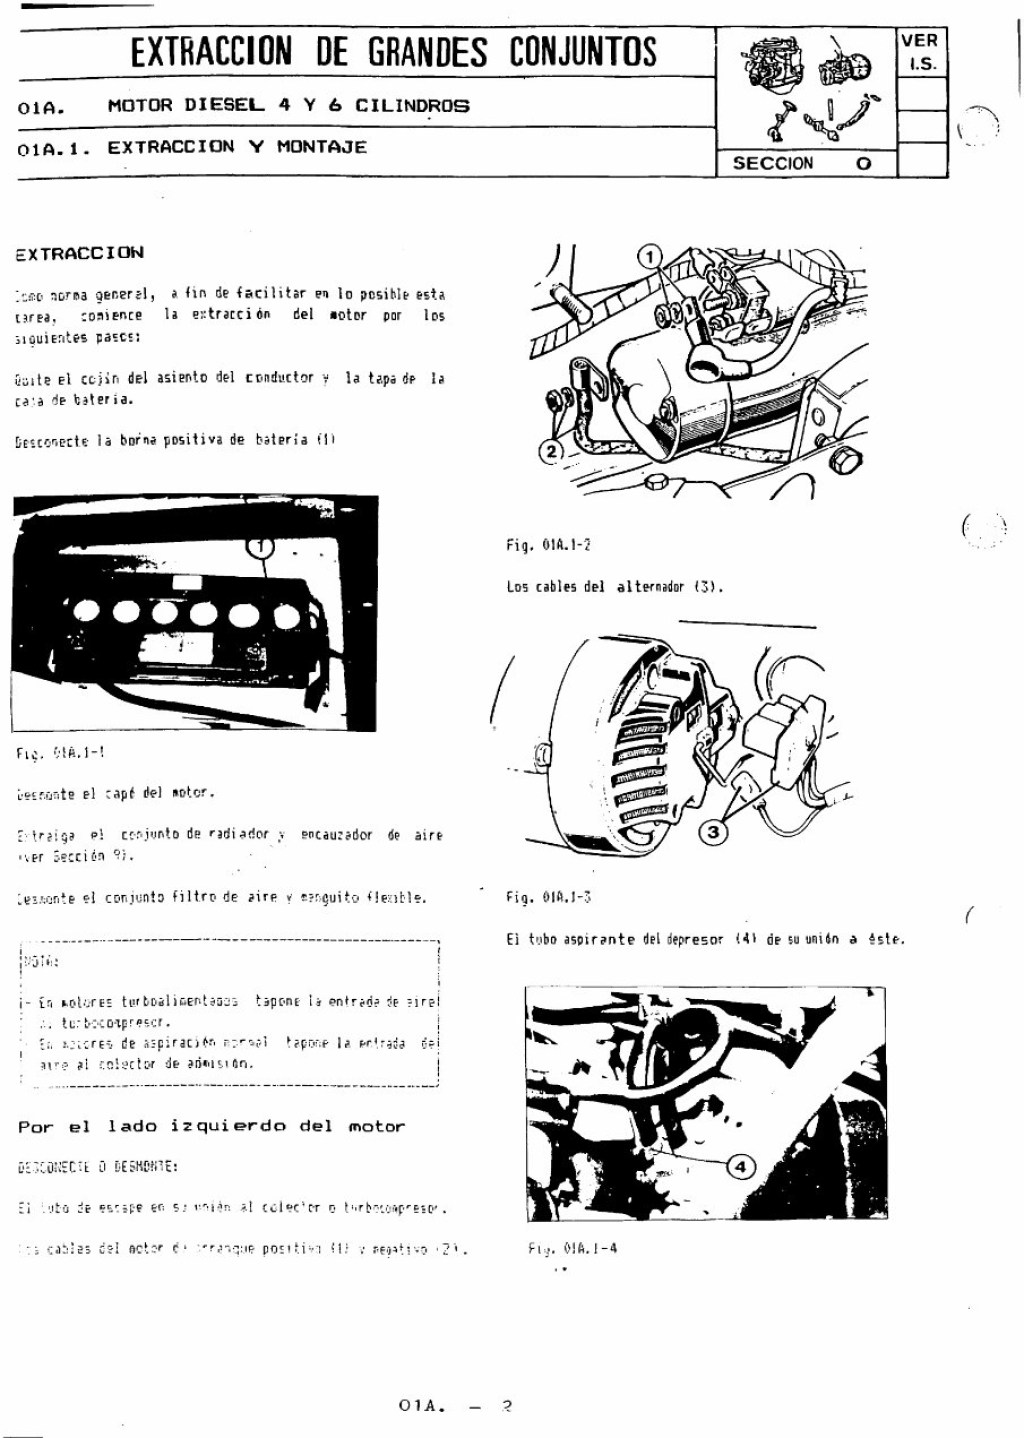 Picture of: Land Rover SANTANA  Service Repair Manual